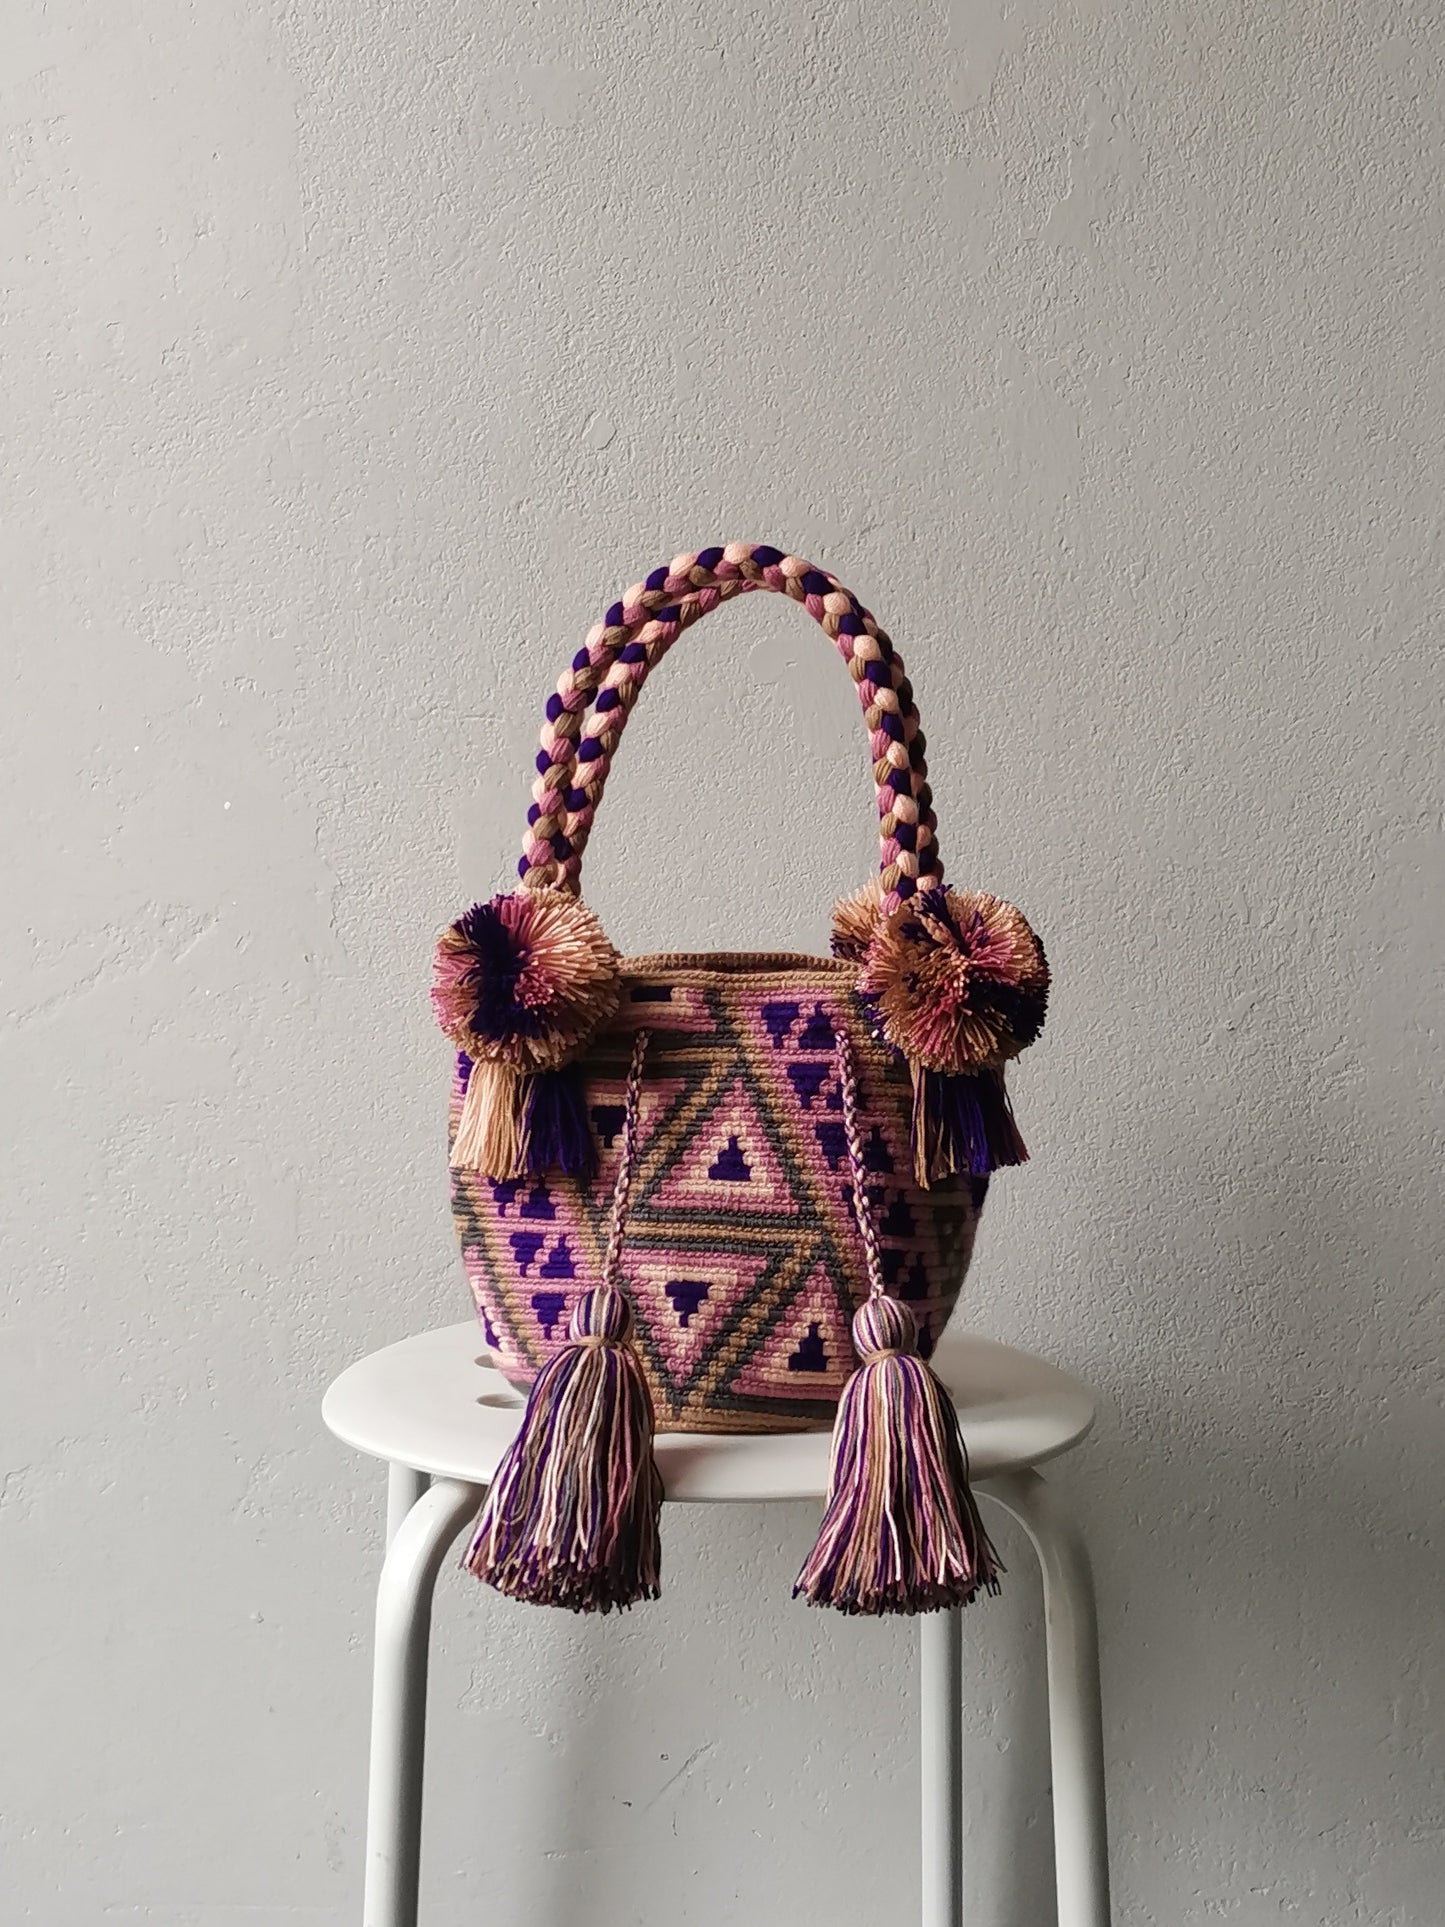 Beige and purple S mochila handbag